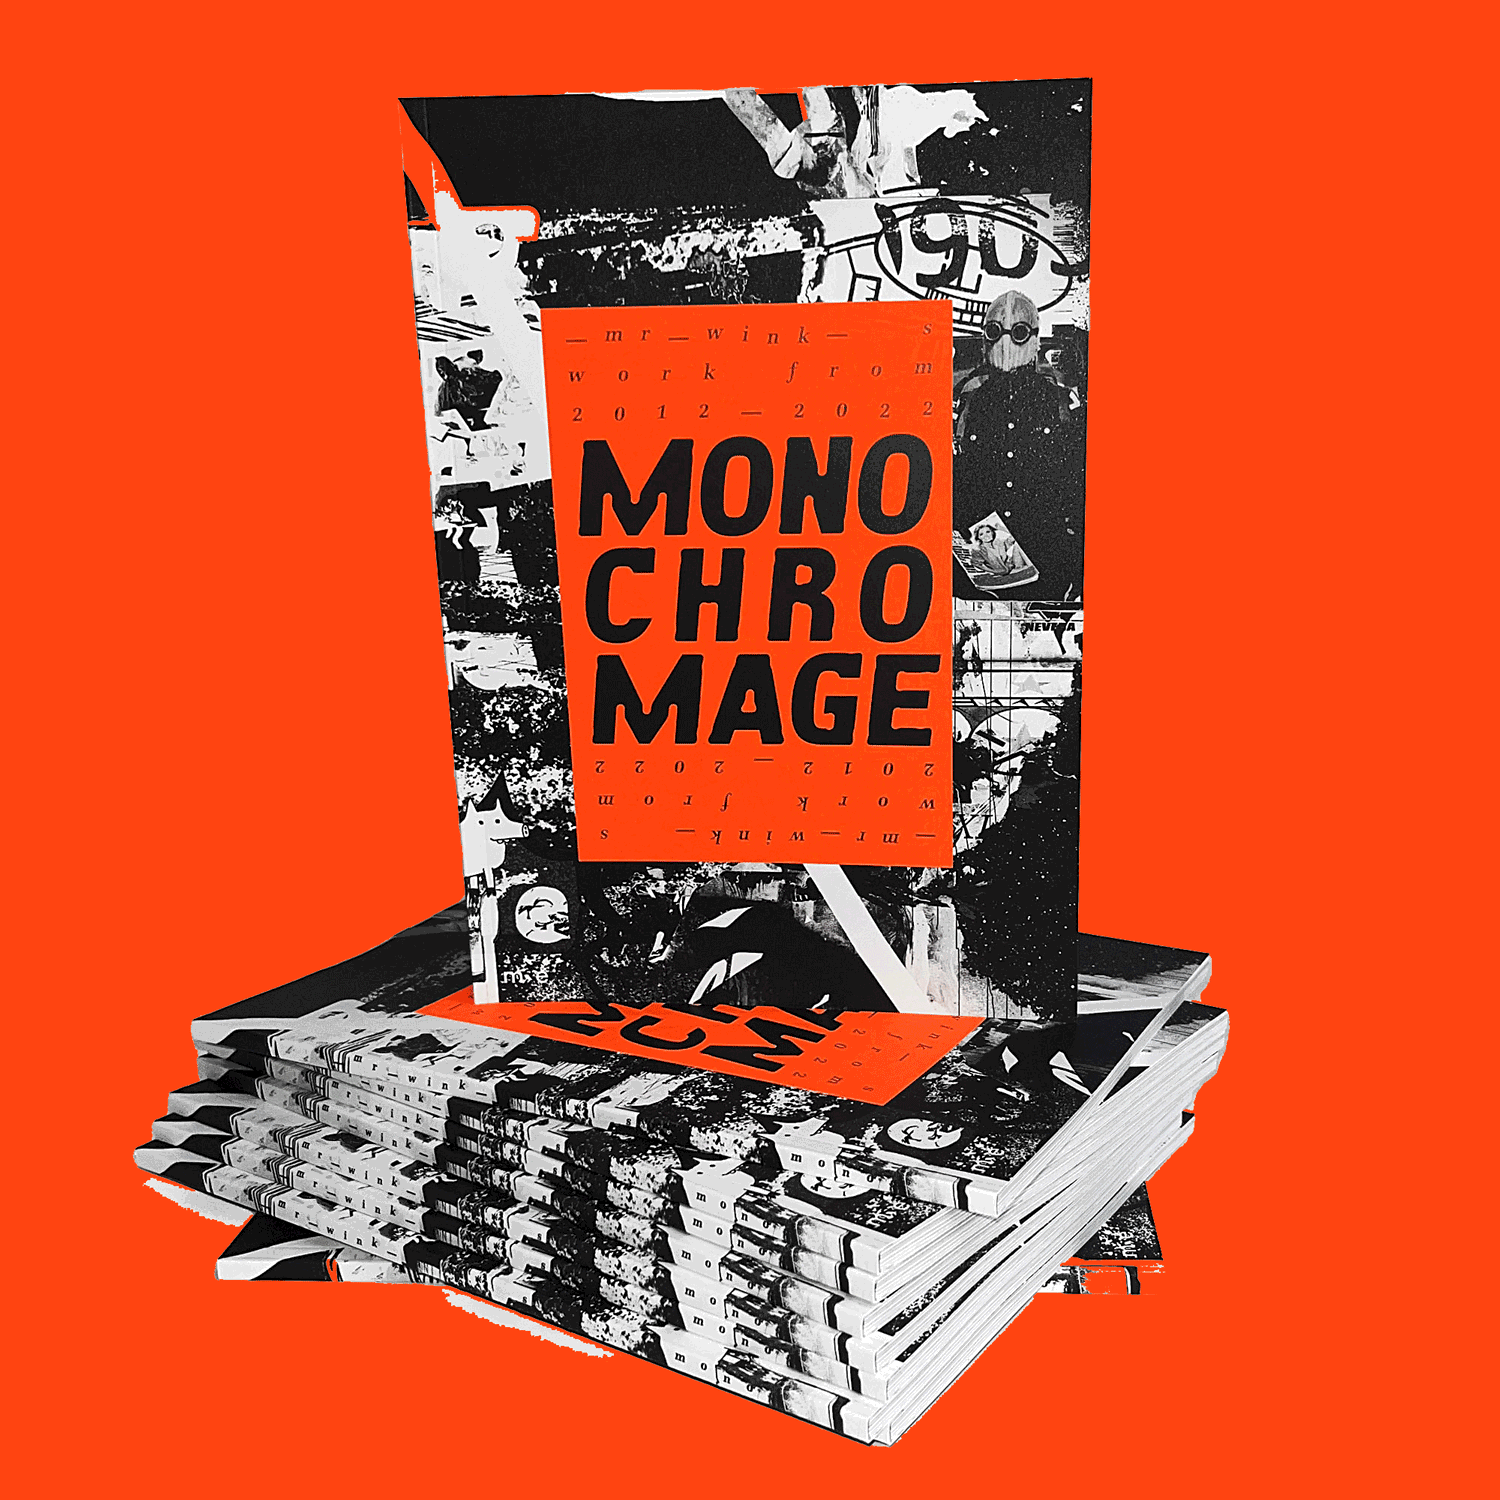 Monochromage - Mr Winks Work from 2012 - 2022 in Monochrome